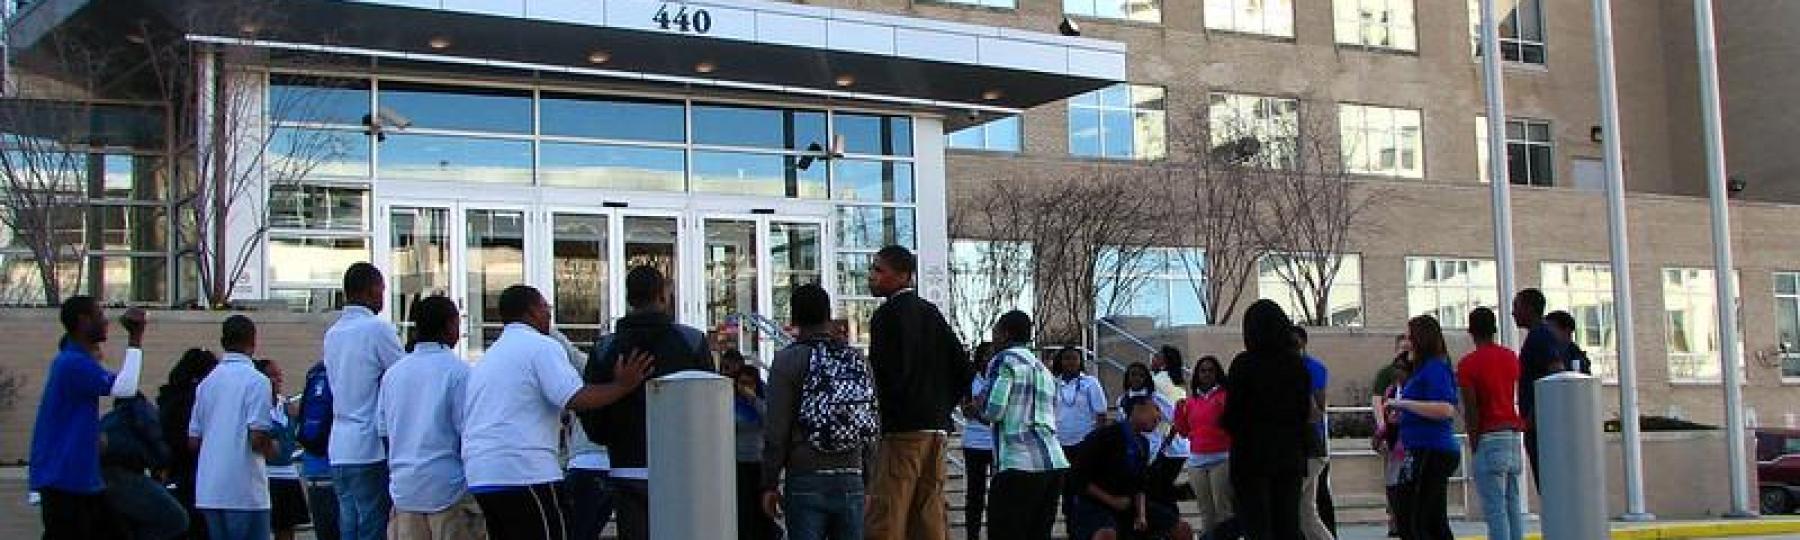 Students outside of a Philadelphia school building